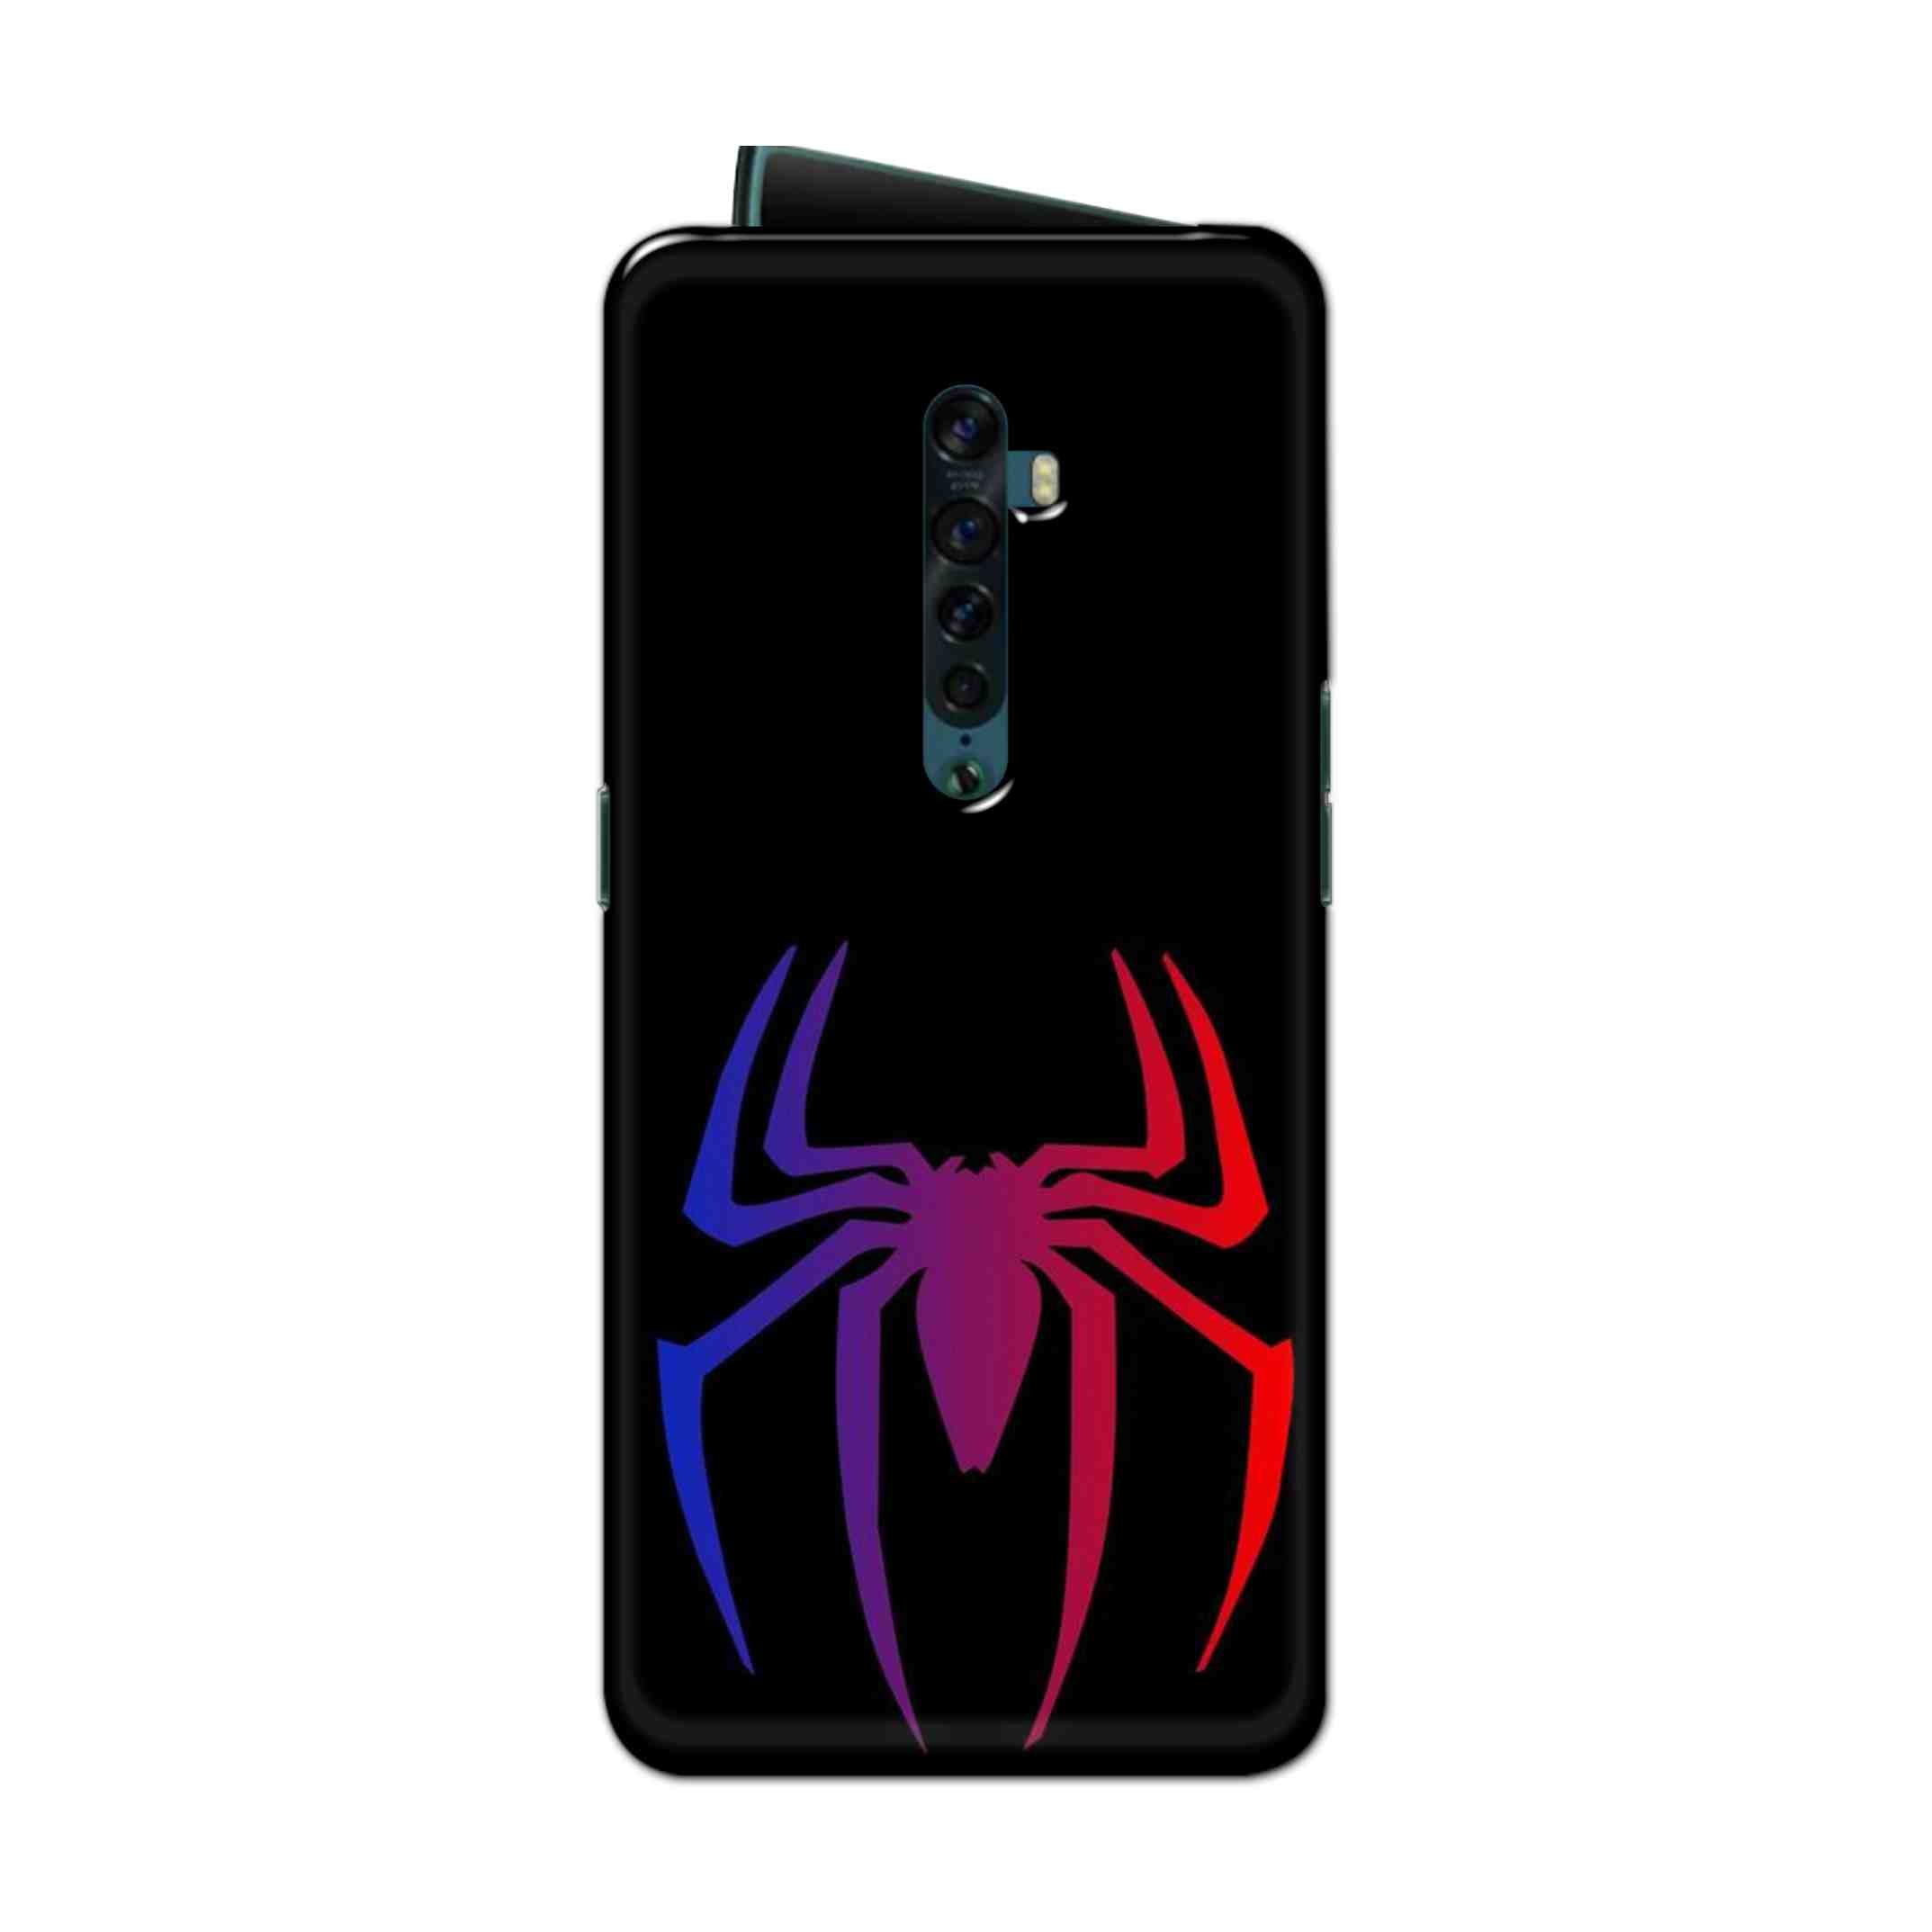 Buy Neon Spiderman Logo Hard Back Mobile Phone Case Cover For Oppo Reno 2 Online